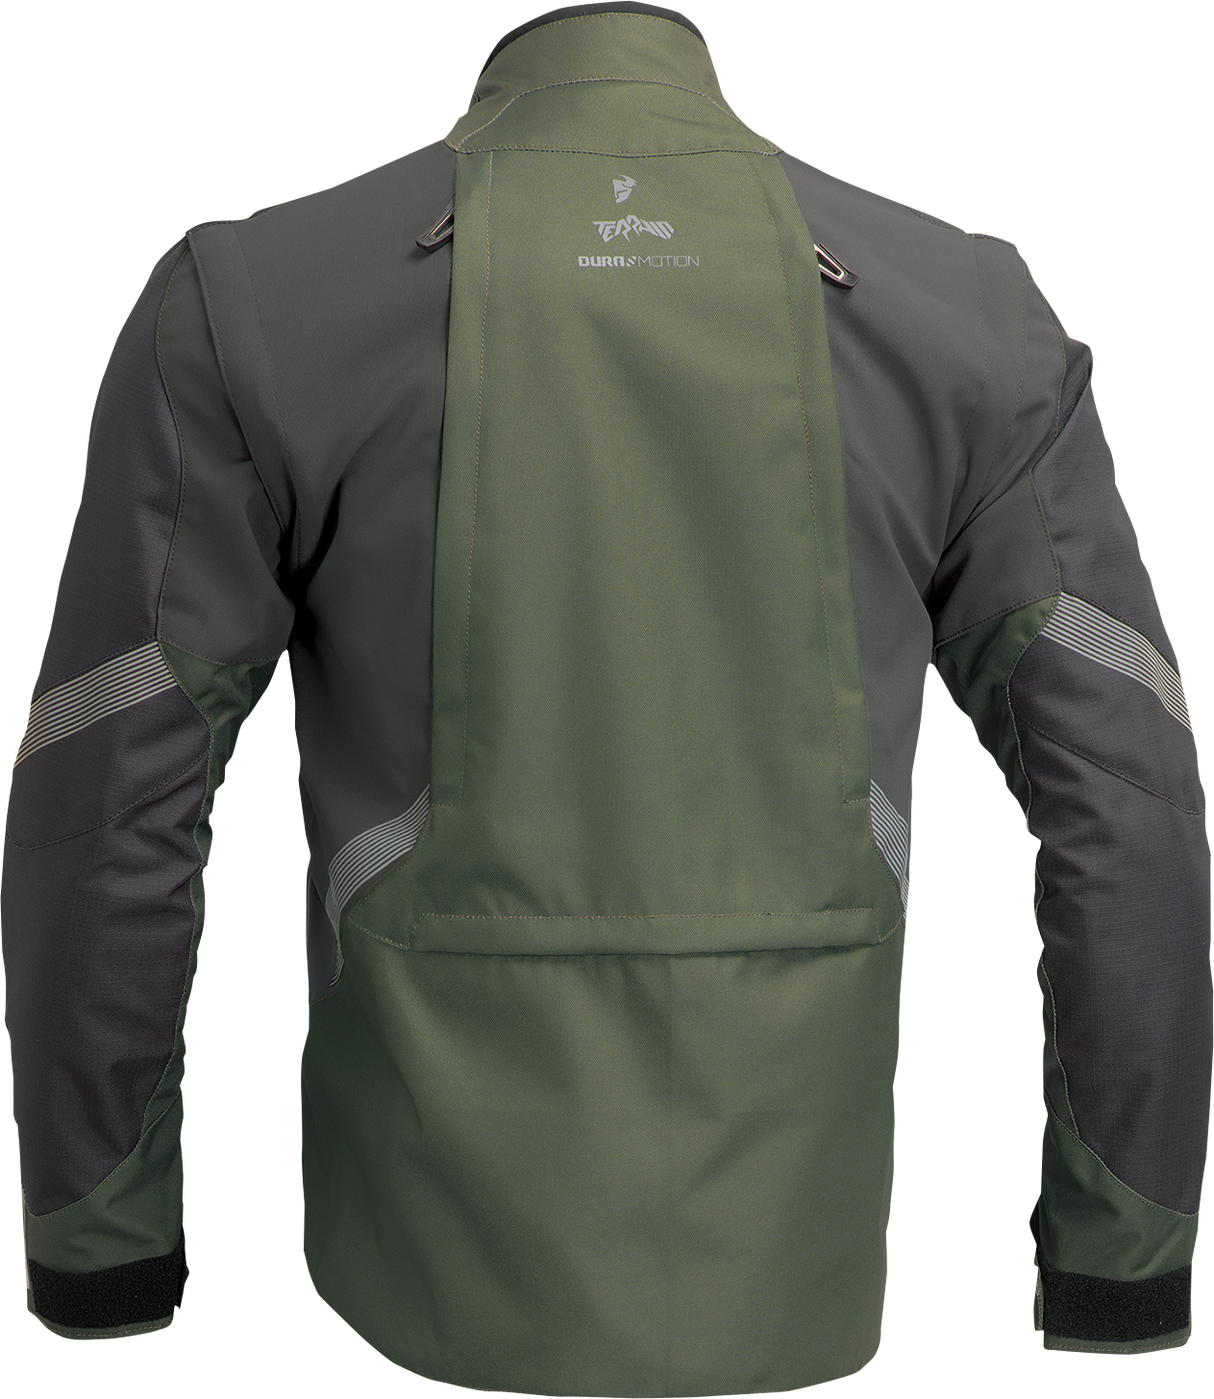 THOR Terrain Jacket - Army Green/Charcoal - 3XL 2920-0707